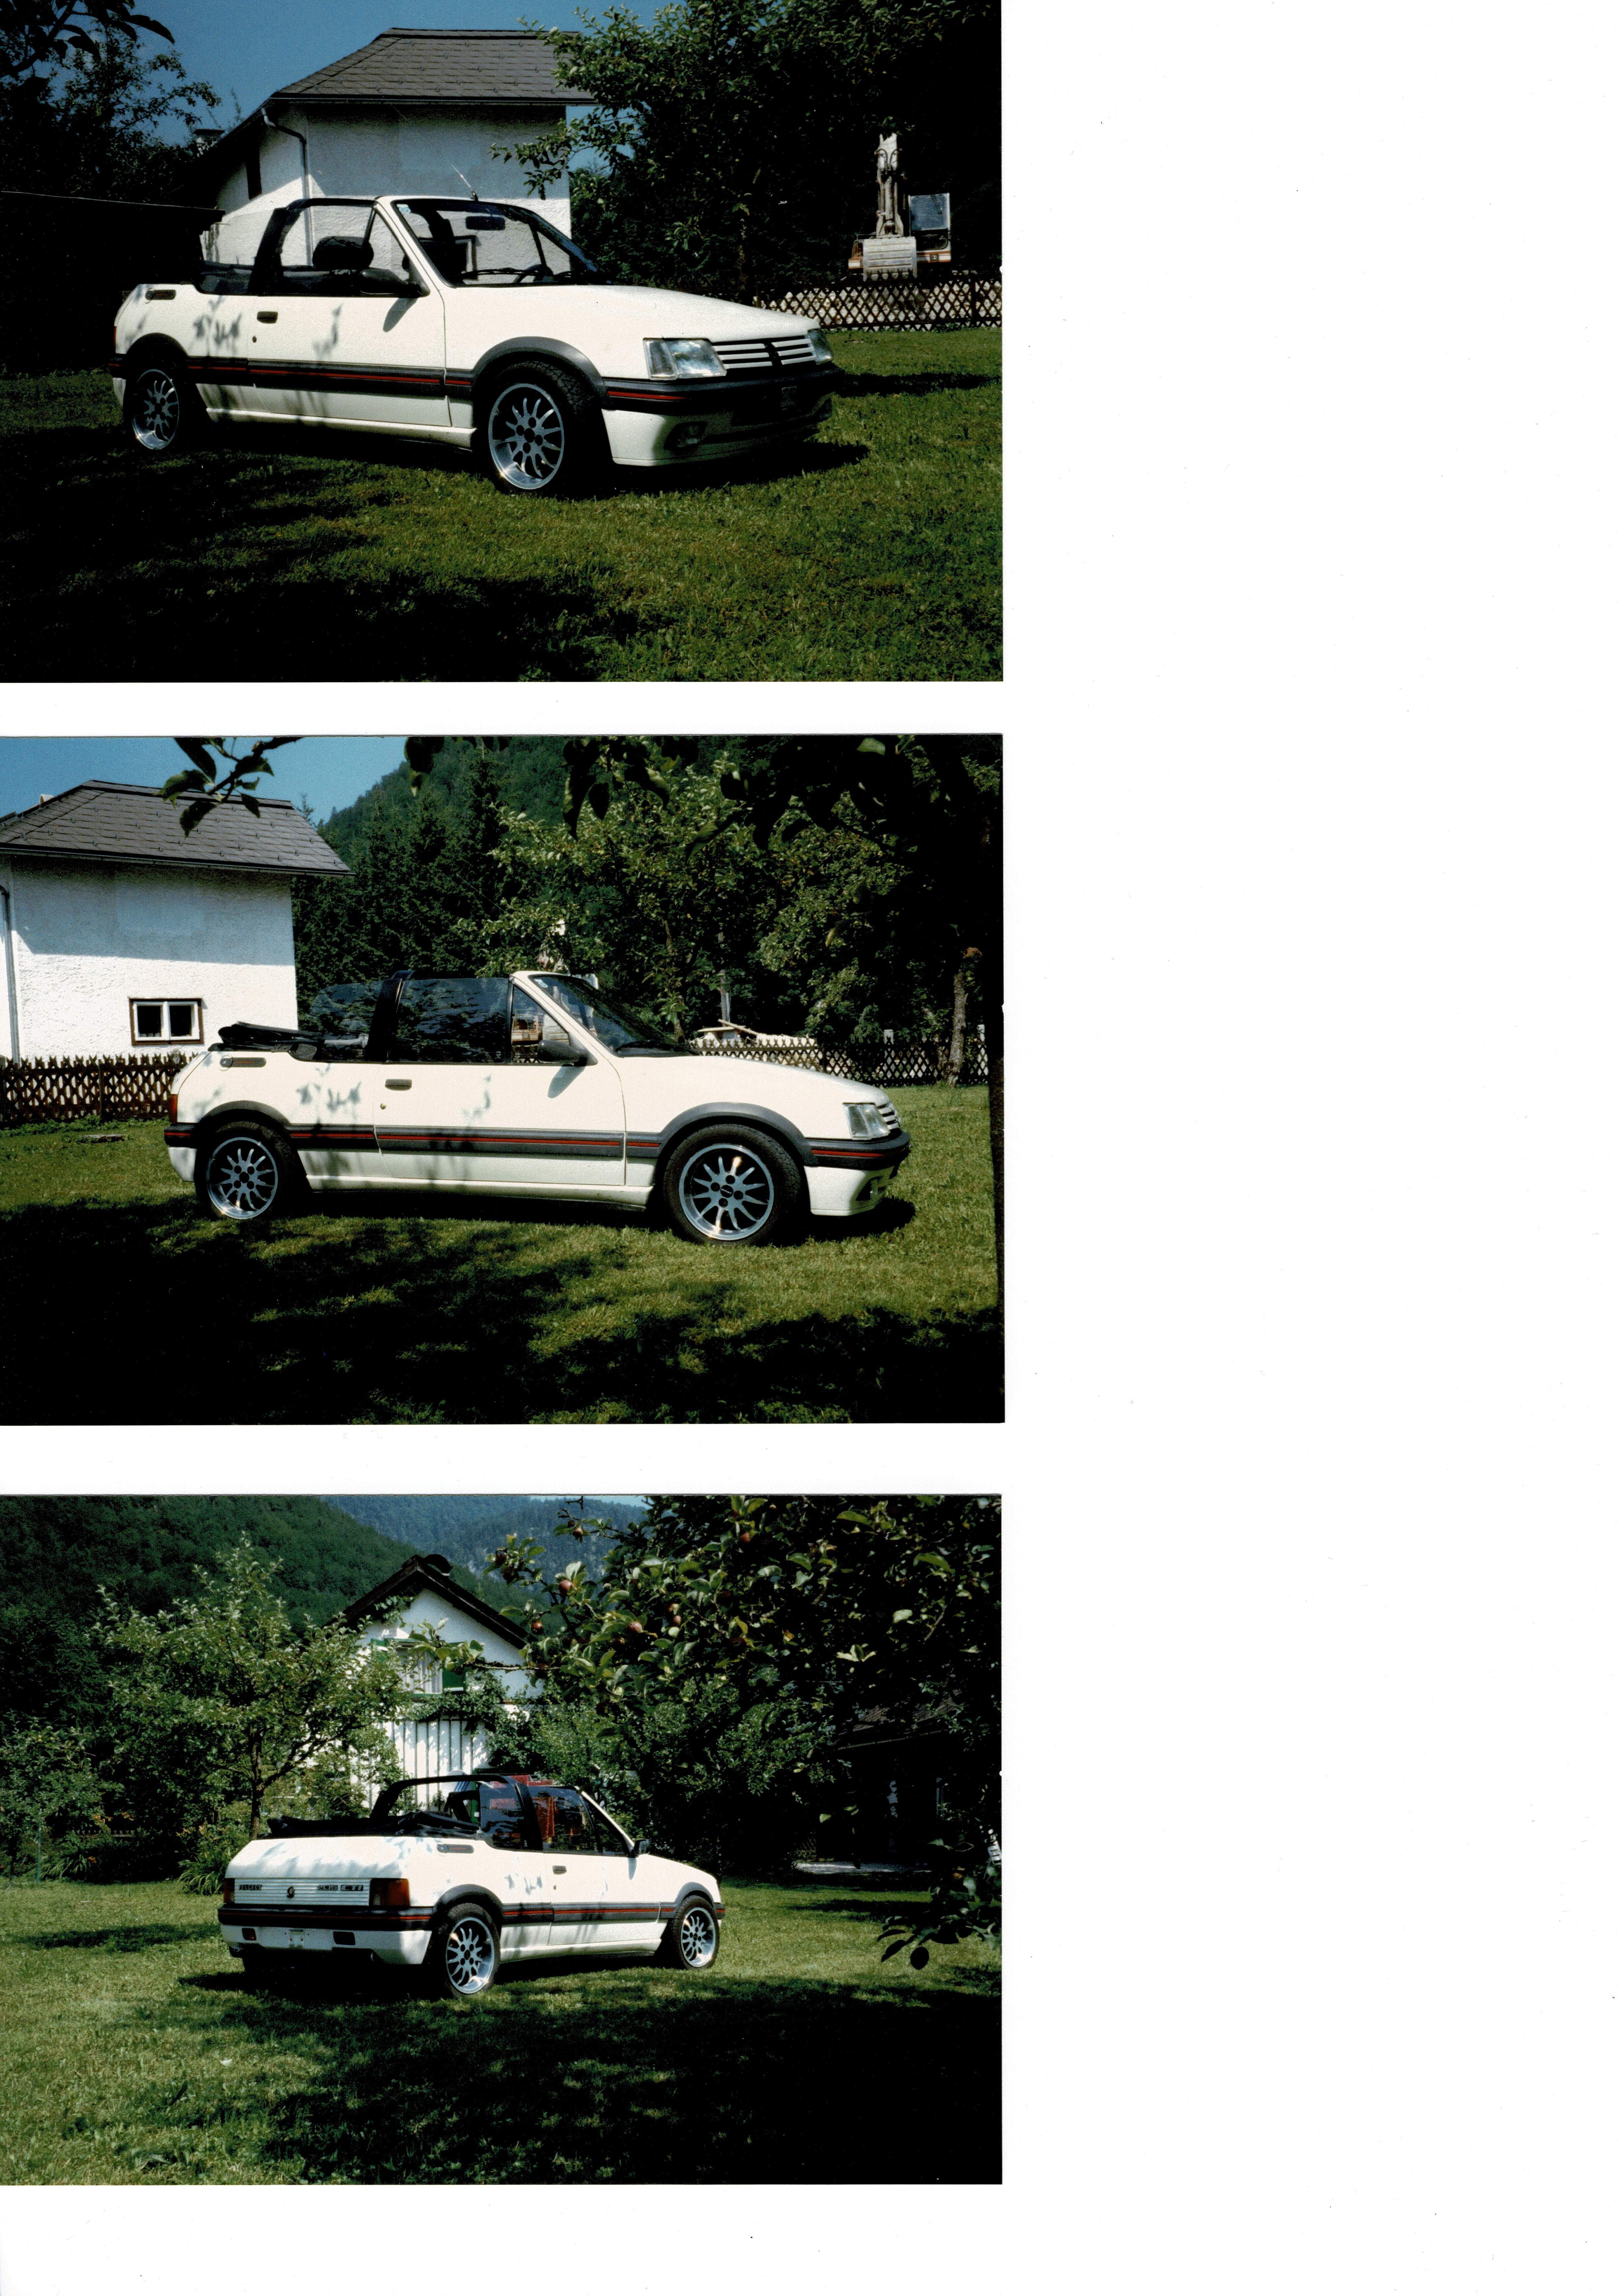 VERKAUF Peugeot 205 CTI, EZ 1986, 97.000km, 105 PS